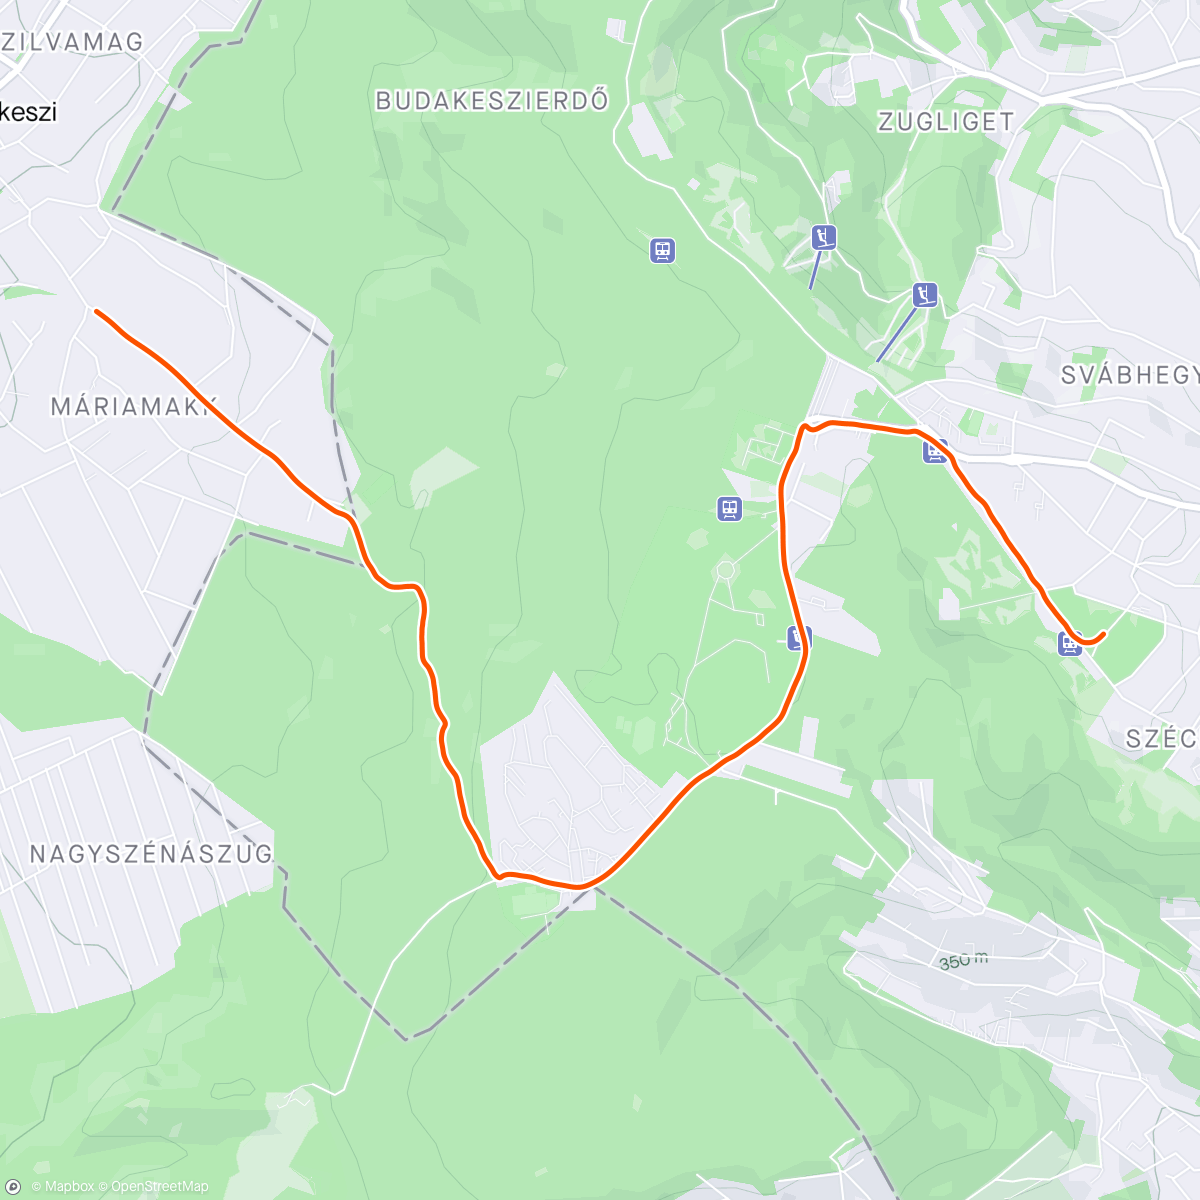 Mappa dell'attività Buda coulda woulda D3: Budakeszierdő Ride